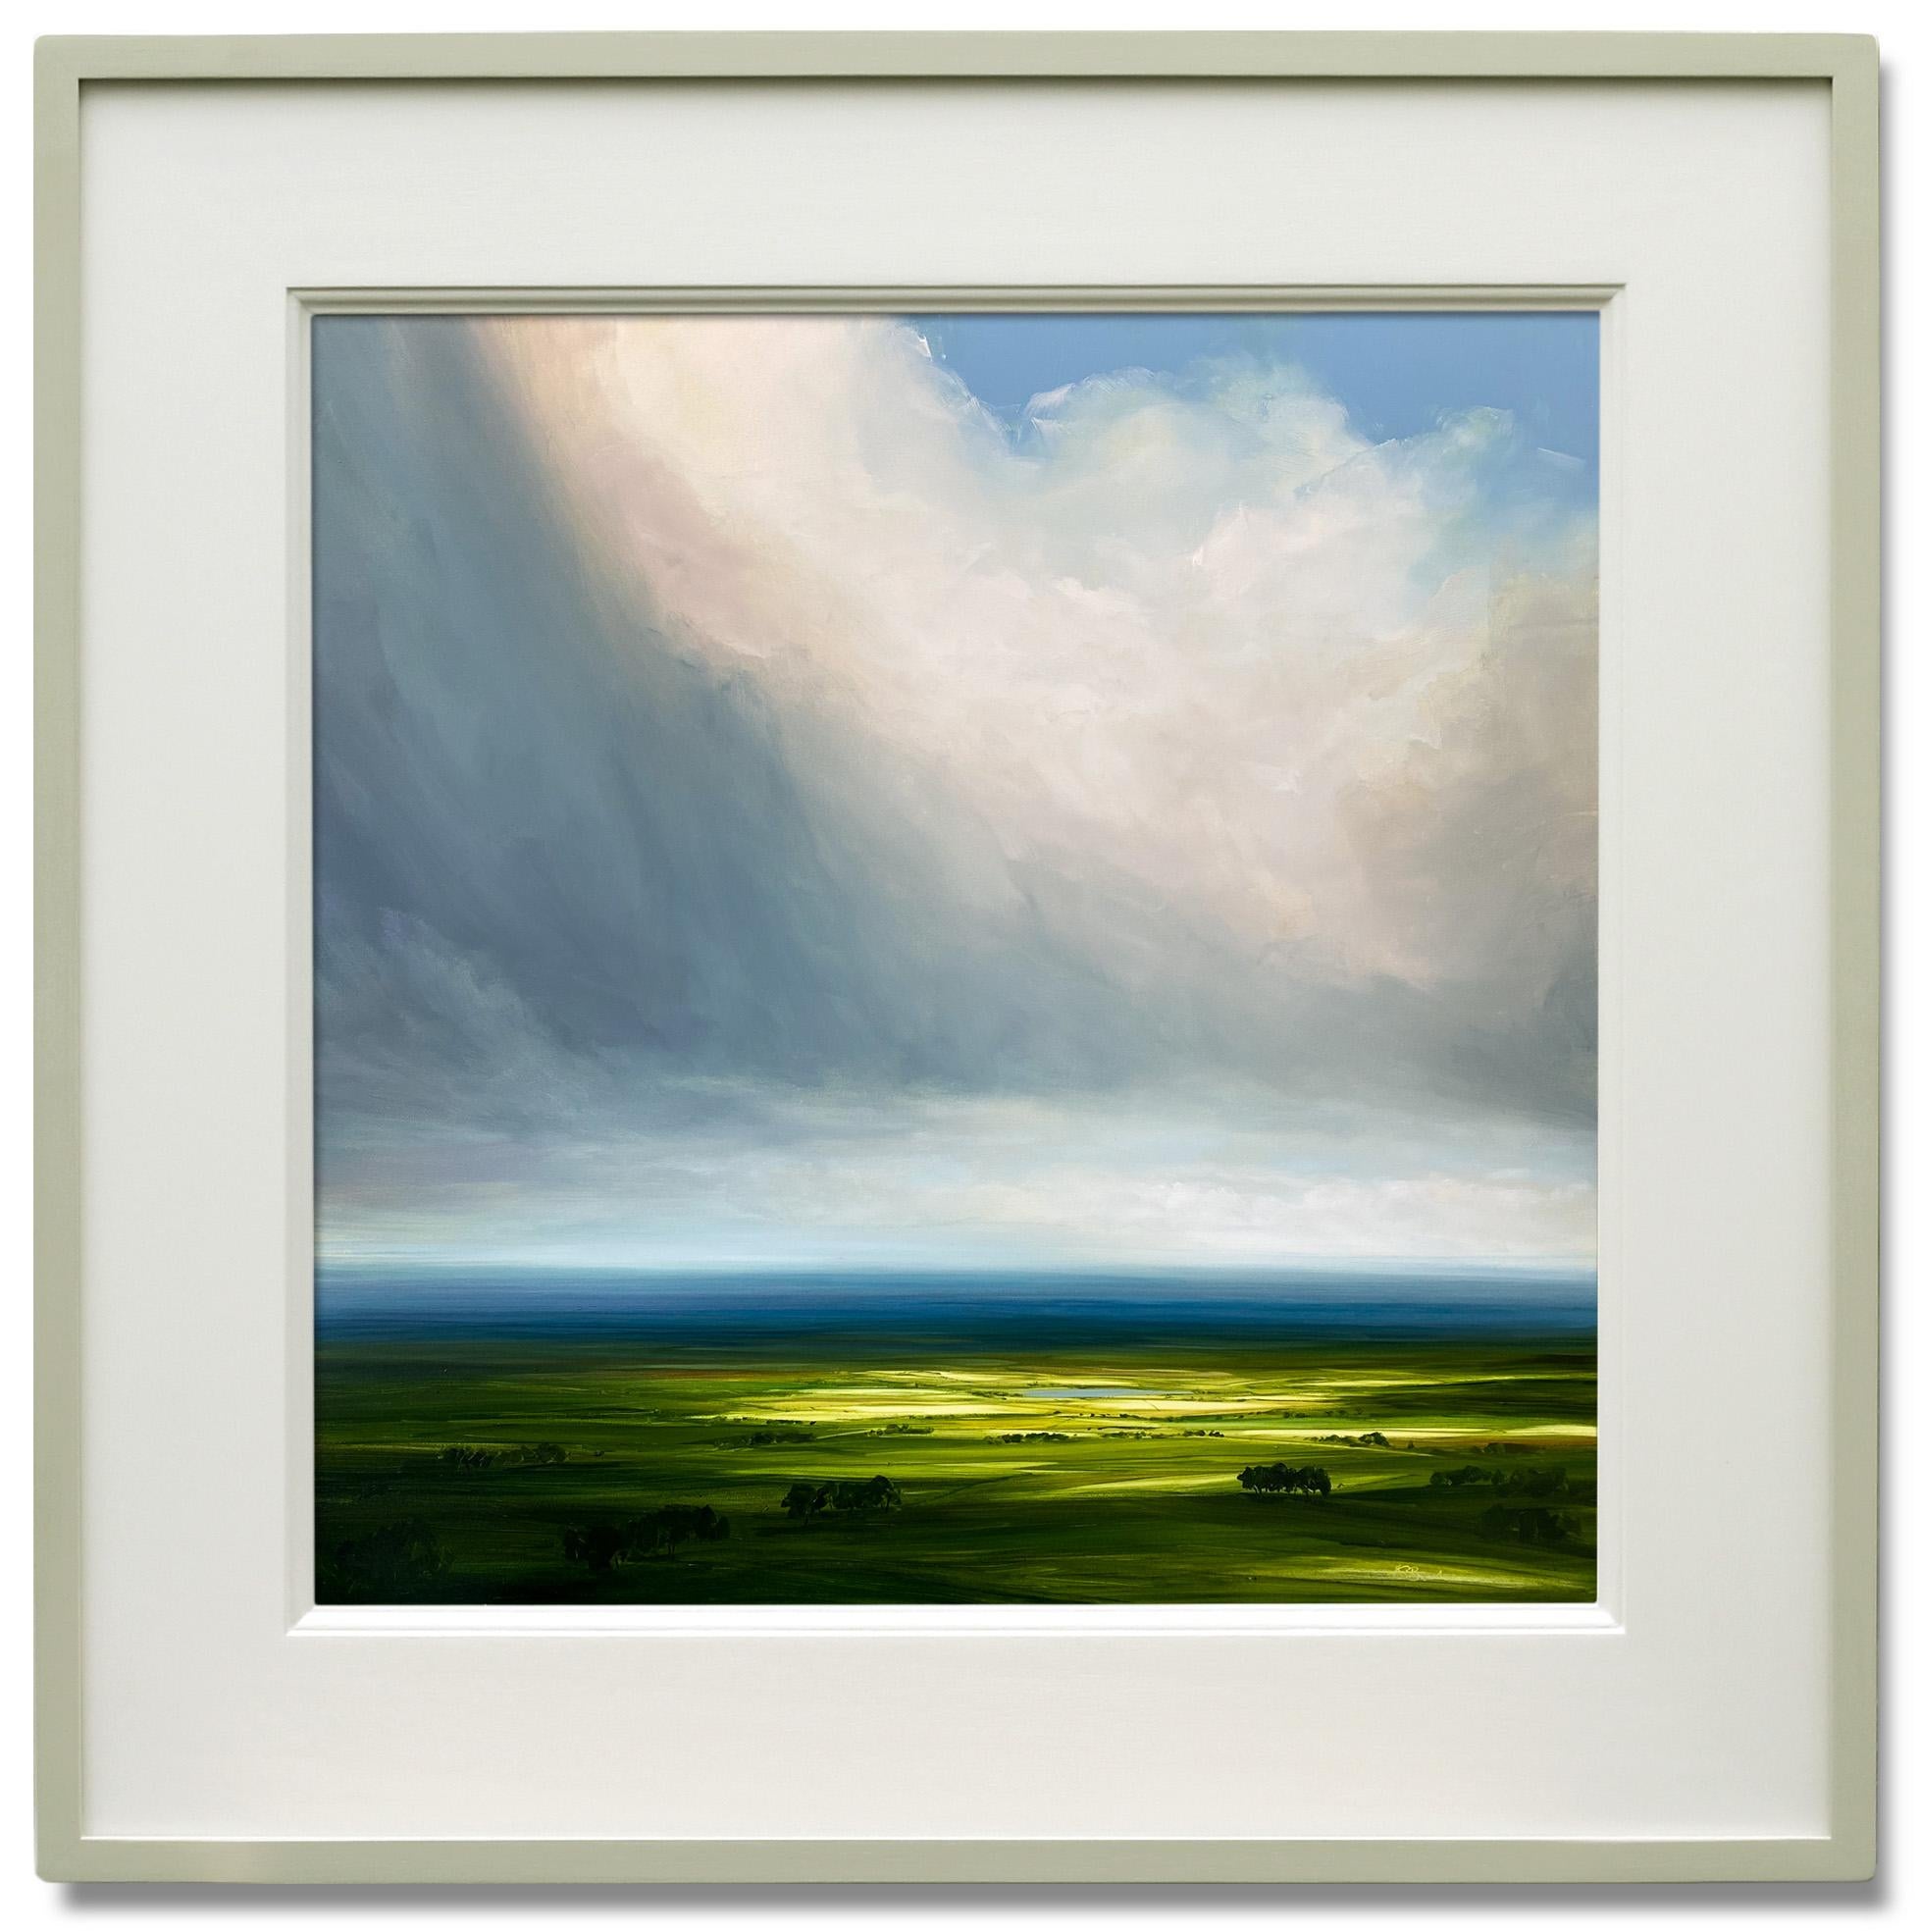 Lingering Spring 1-original impressionism landscape painting- contemporary ART